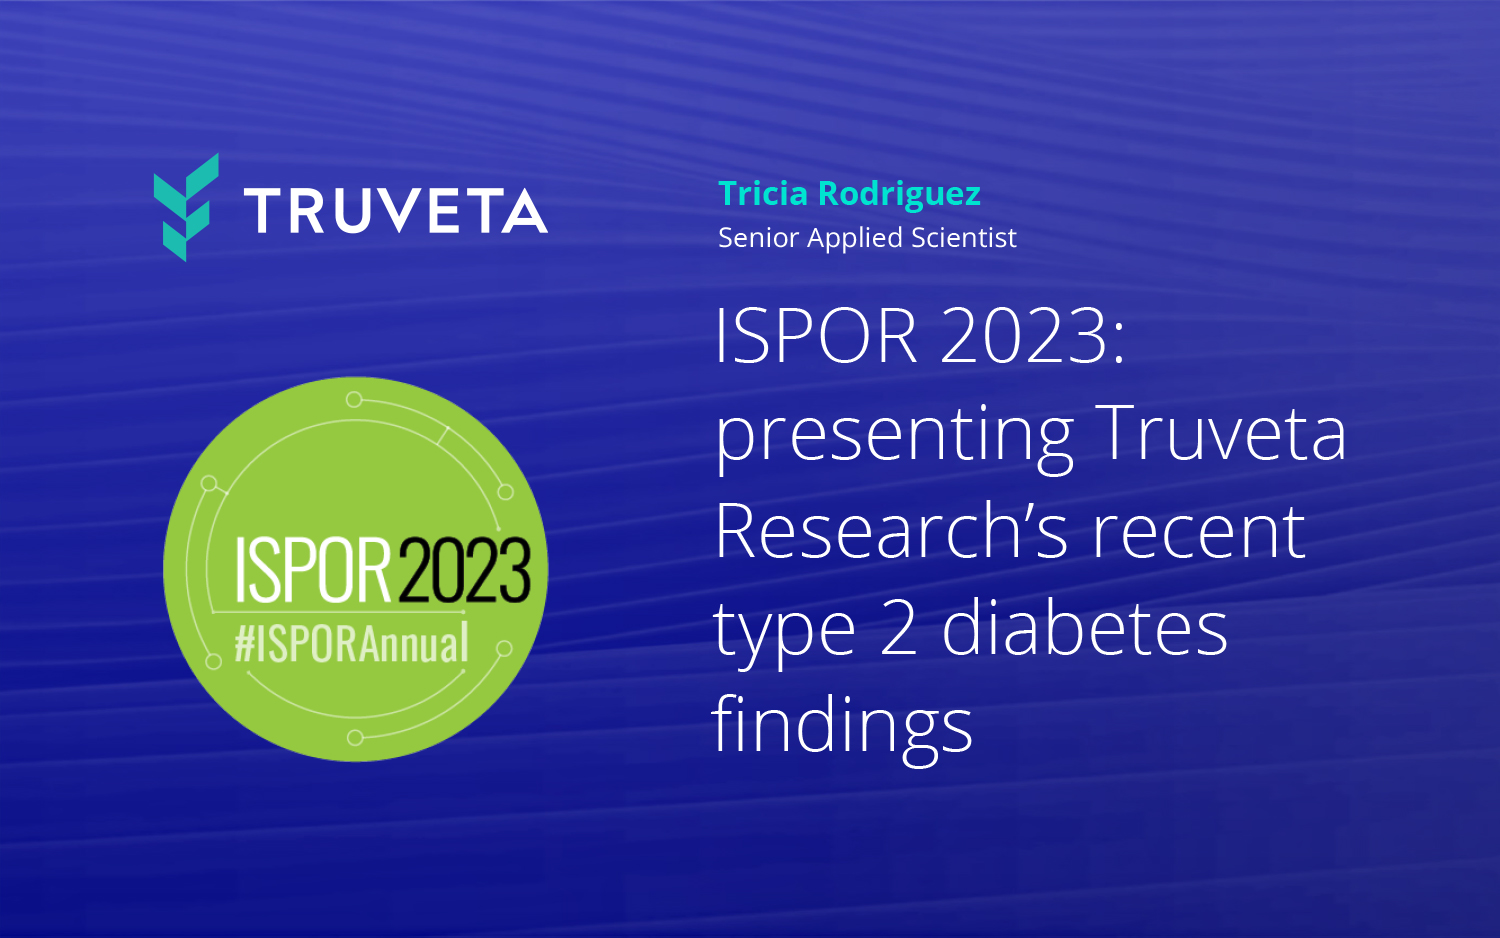 ISPOR 2023 Presenting Truveta Research’s recent type 2 diabetes